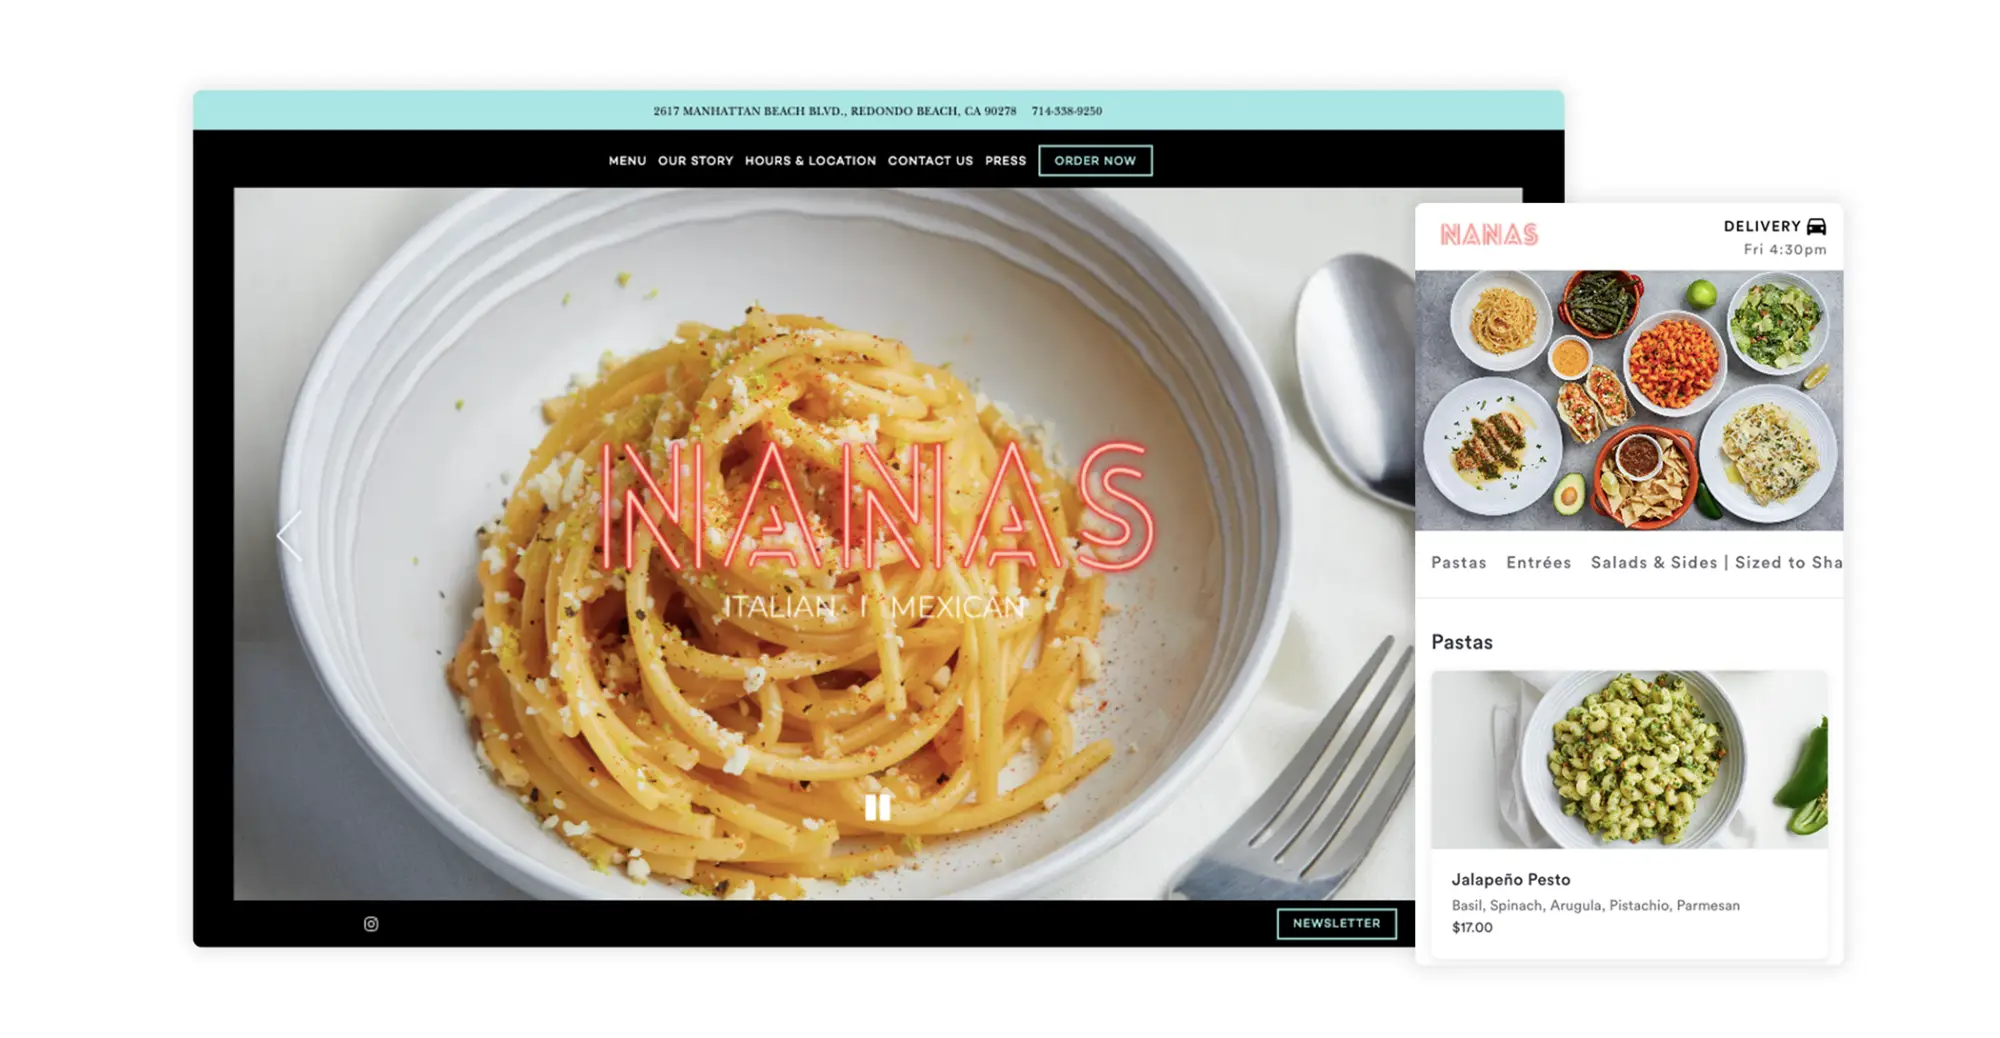 the restaurant website for NANAS